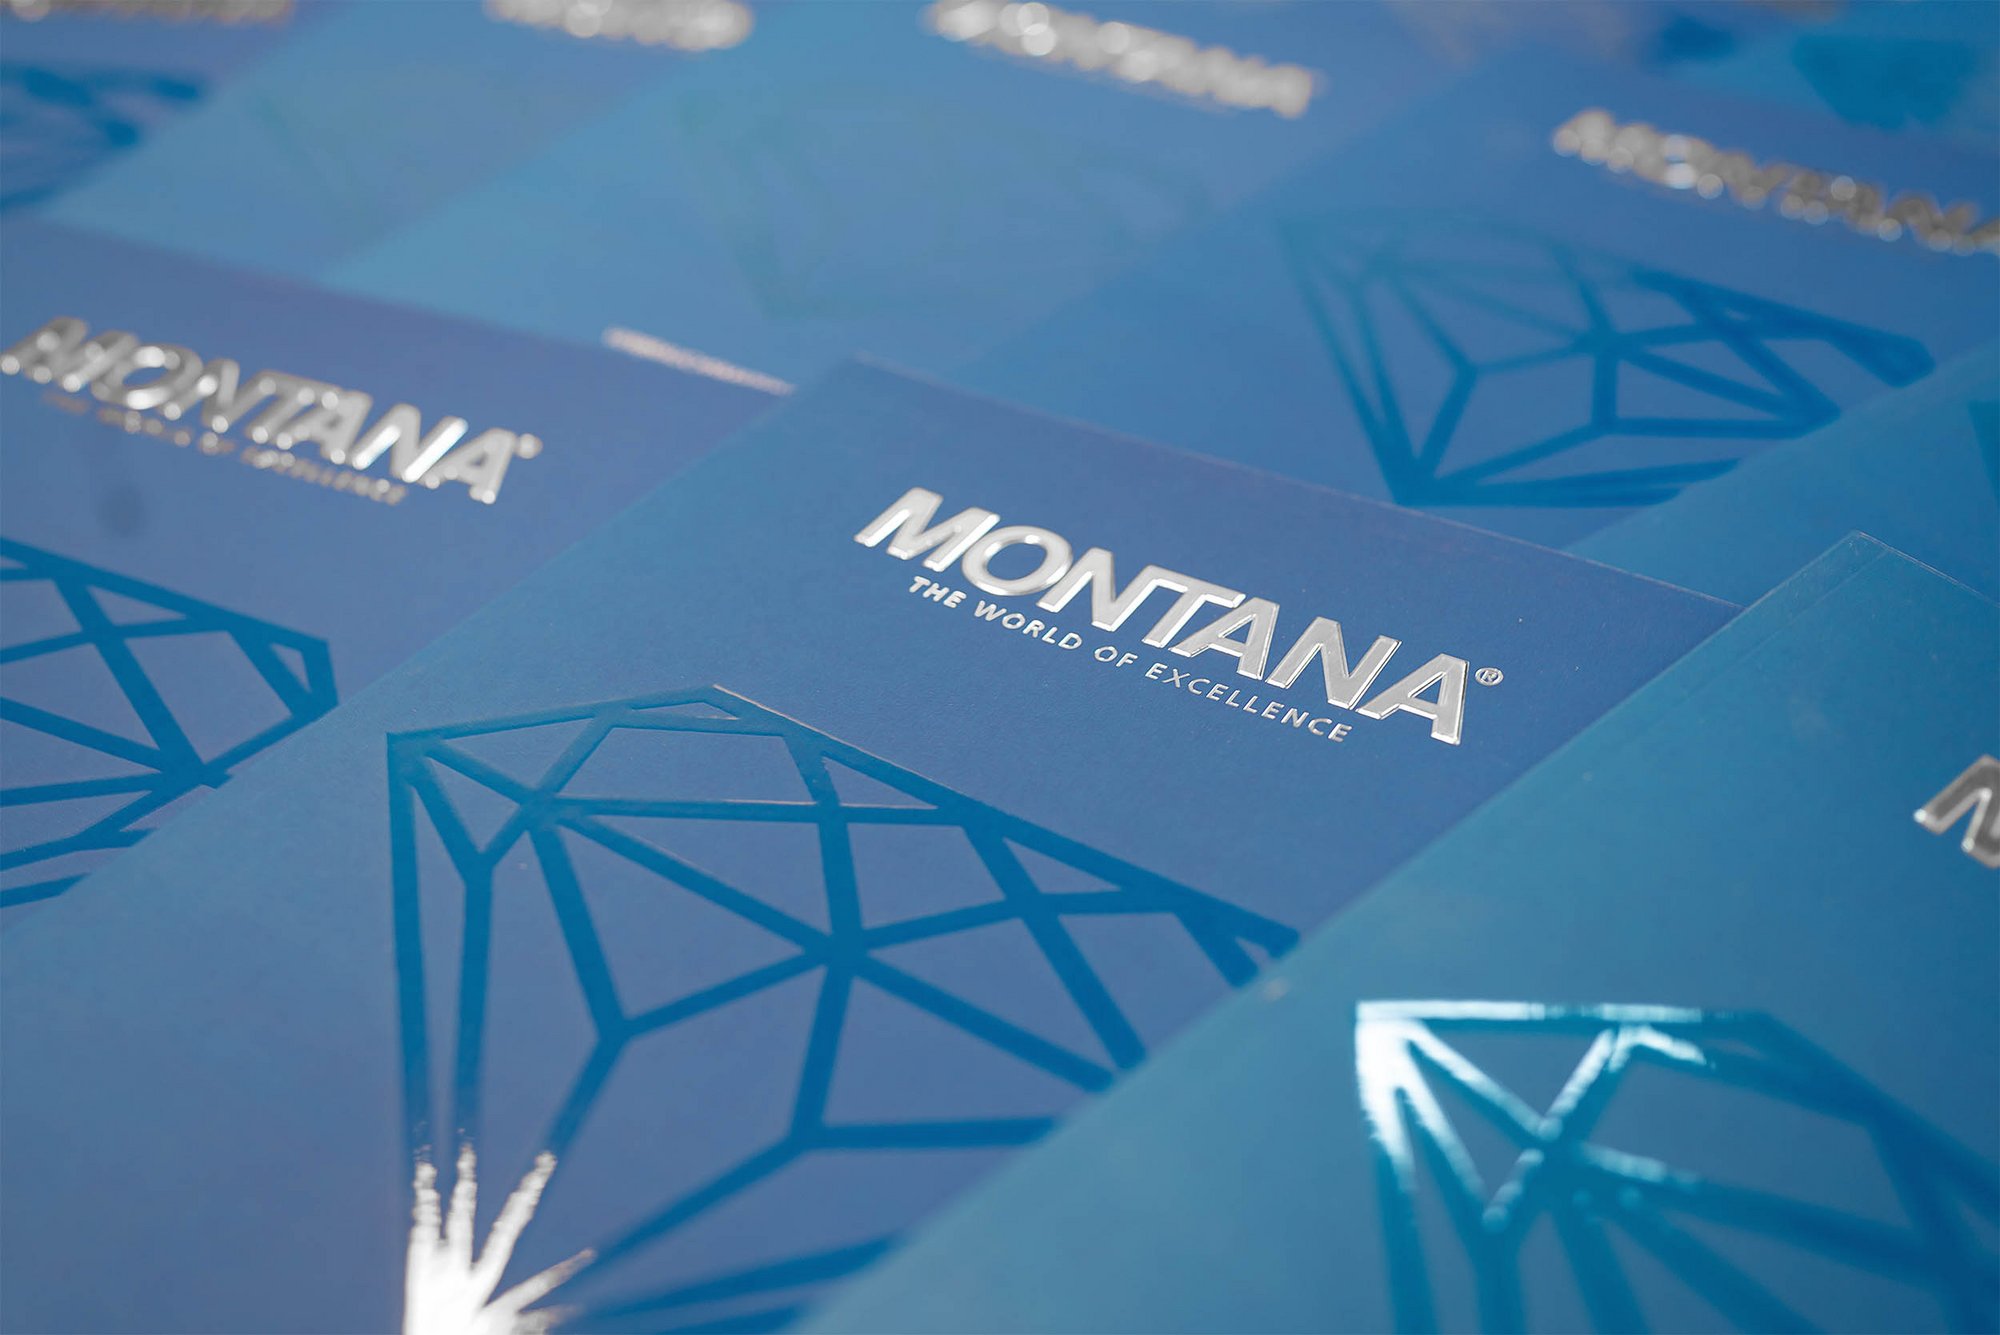 MONTANA catalog cover sheet, download